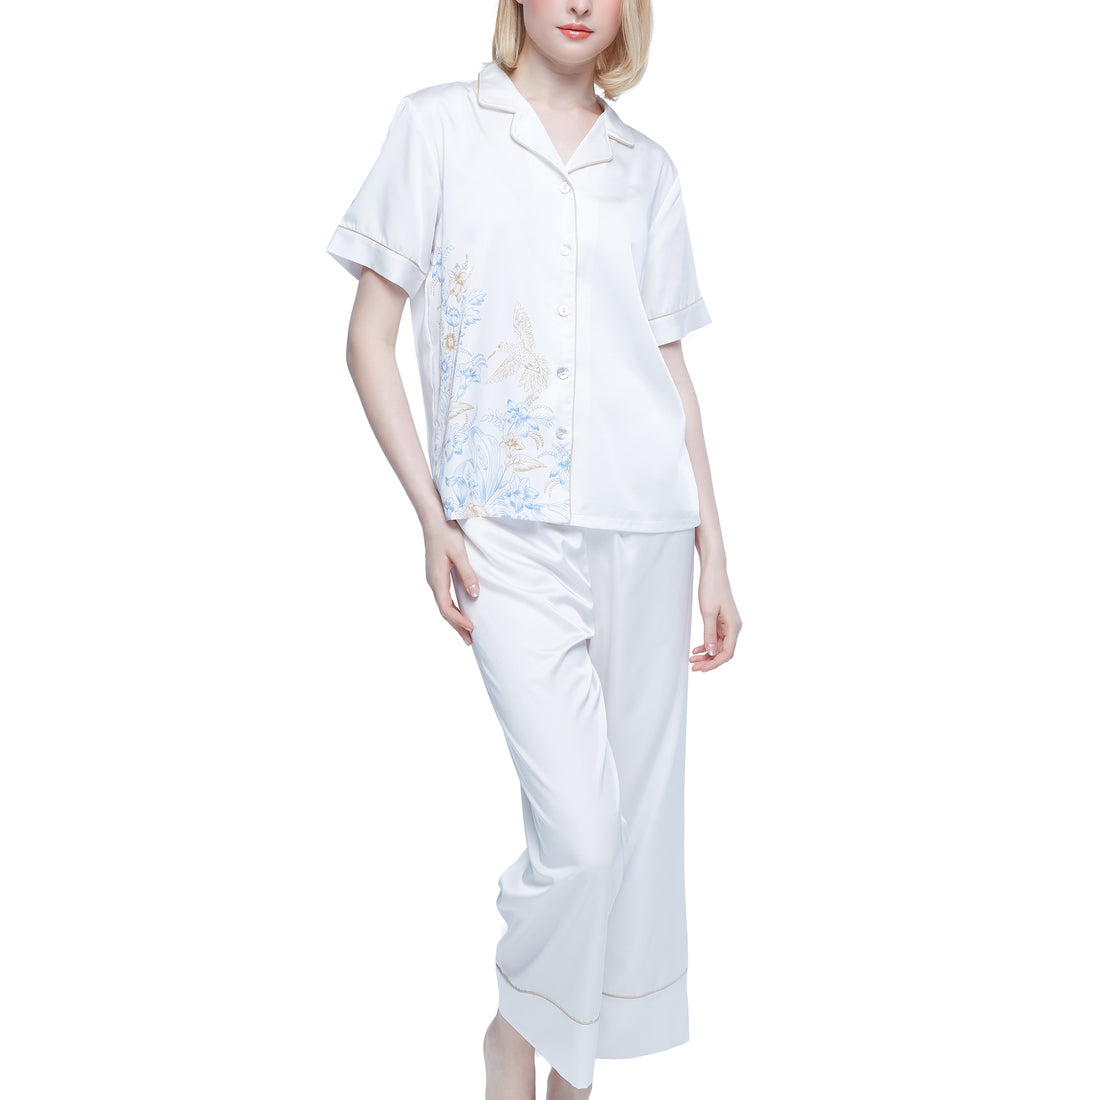 Wacoal Sleepwear Wacoal pajamas, Hawaiian neck short sleeve shirt/long pants, satin fabric, model WN7E27, blue (SX)